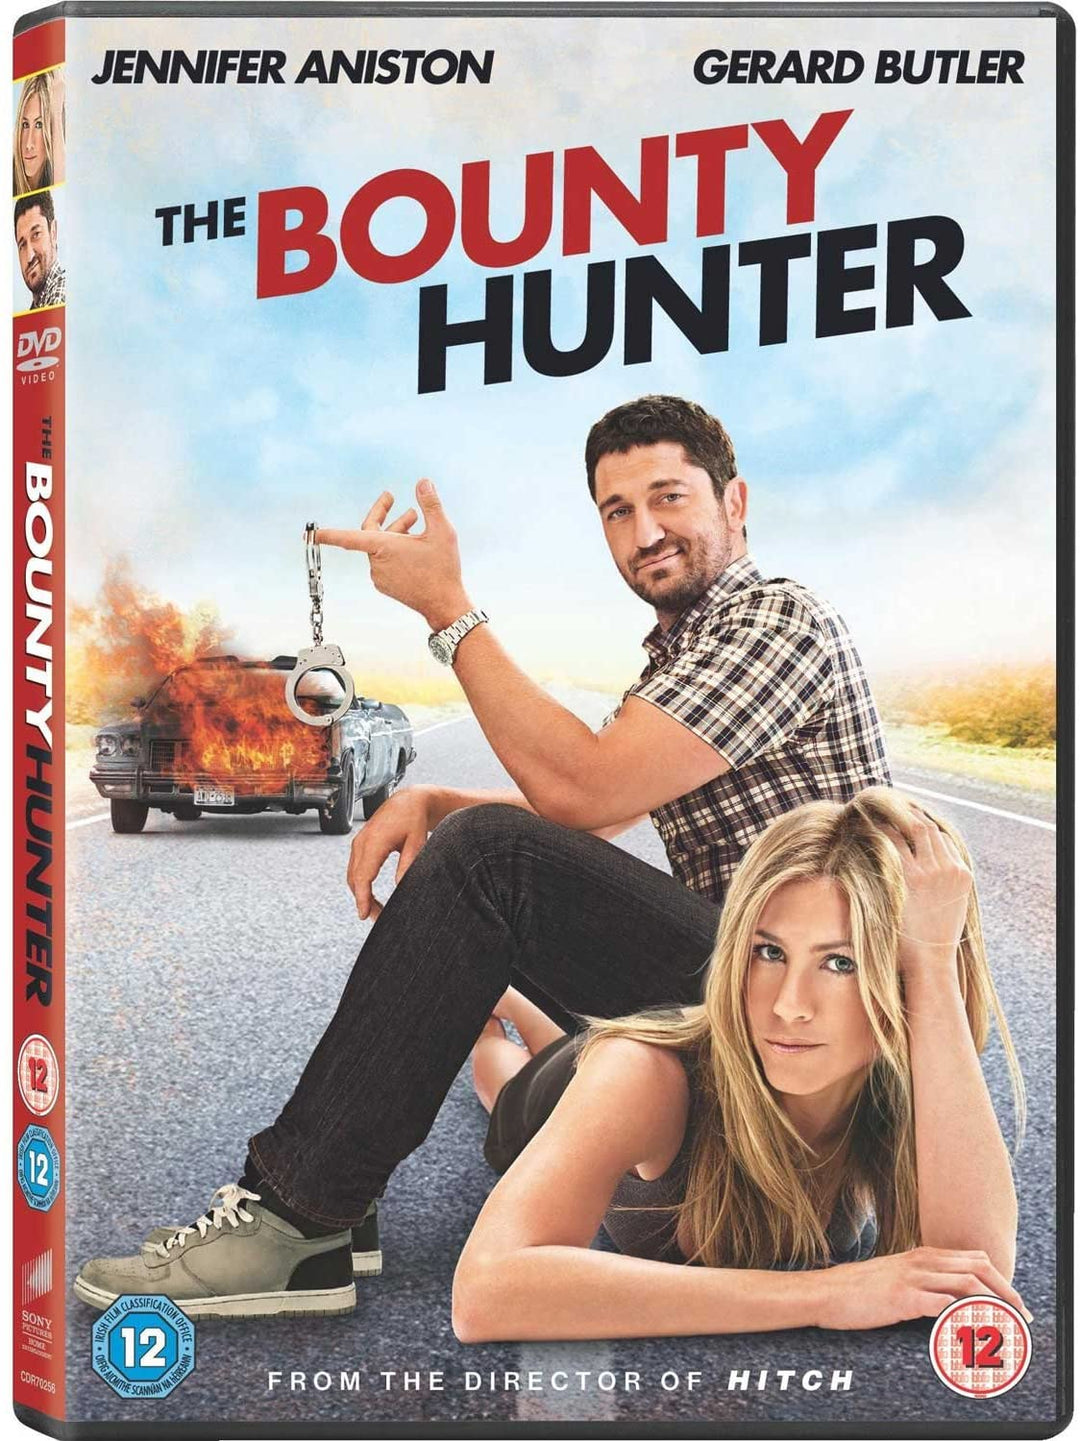 The Bounty Hunter [2010] - Action/Romance [DVD]